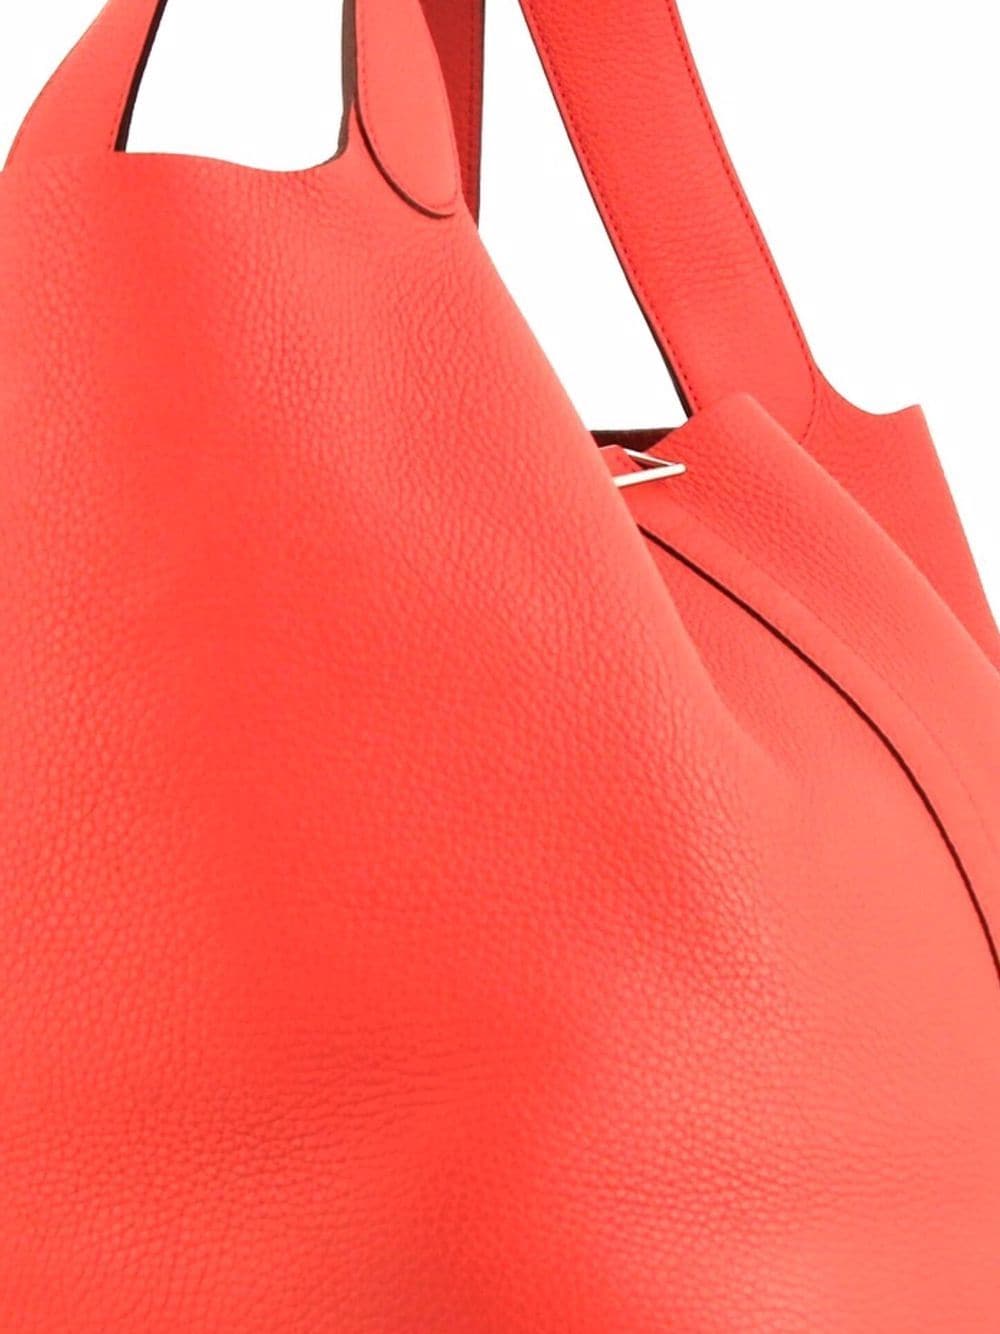 Hermès pre-owned Picotin GM Leather Tote Bag - Farfetch